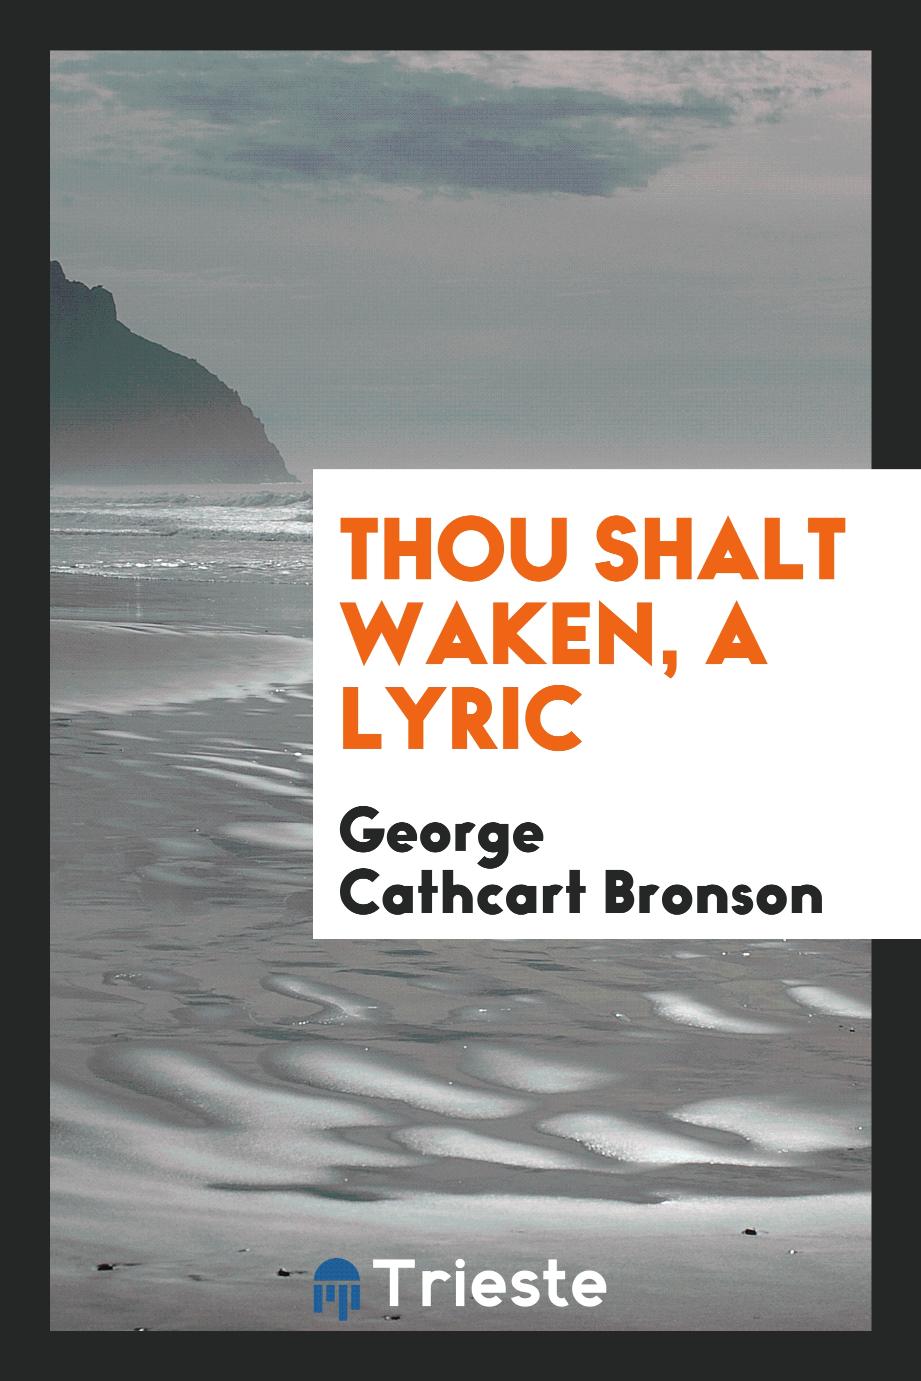 Thou shalt waken, a lyric